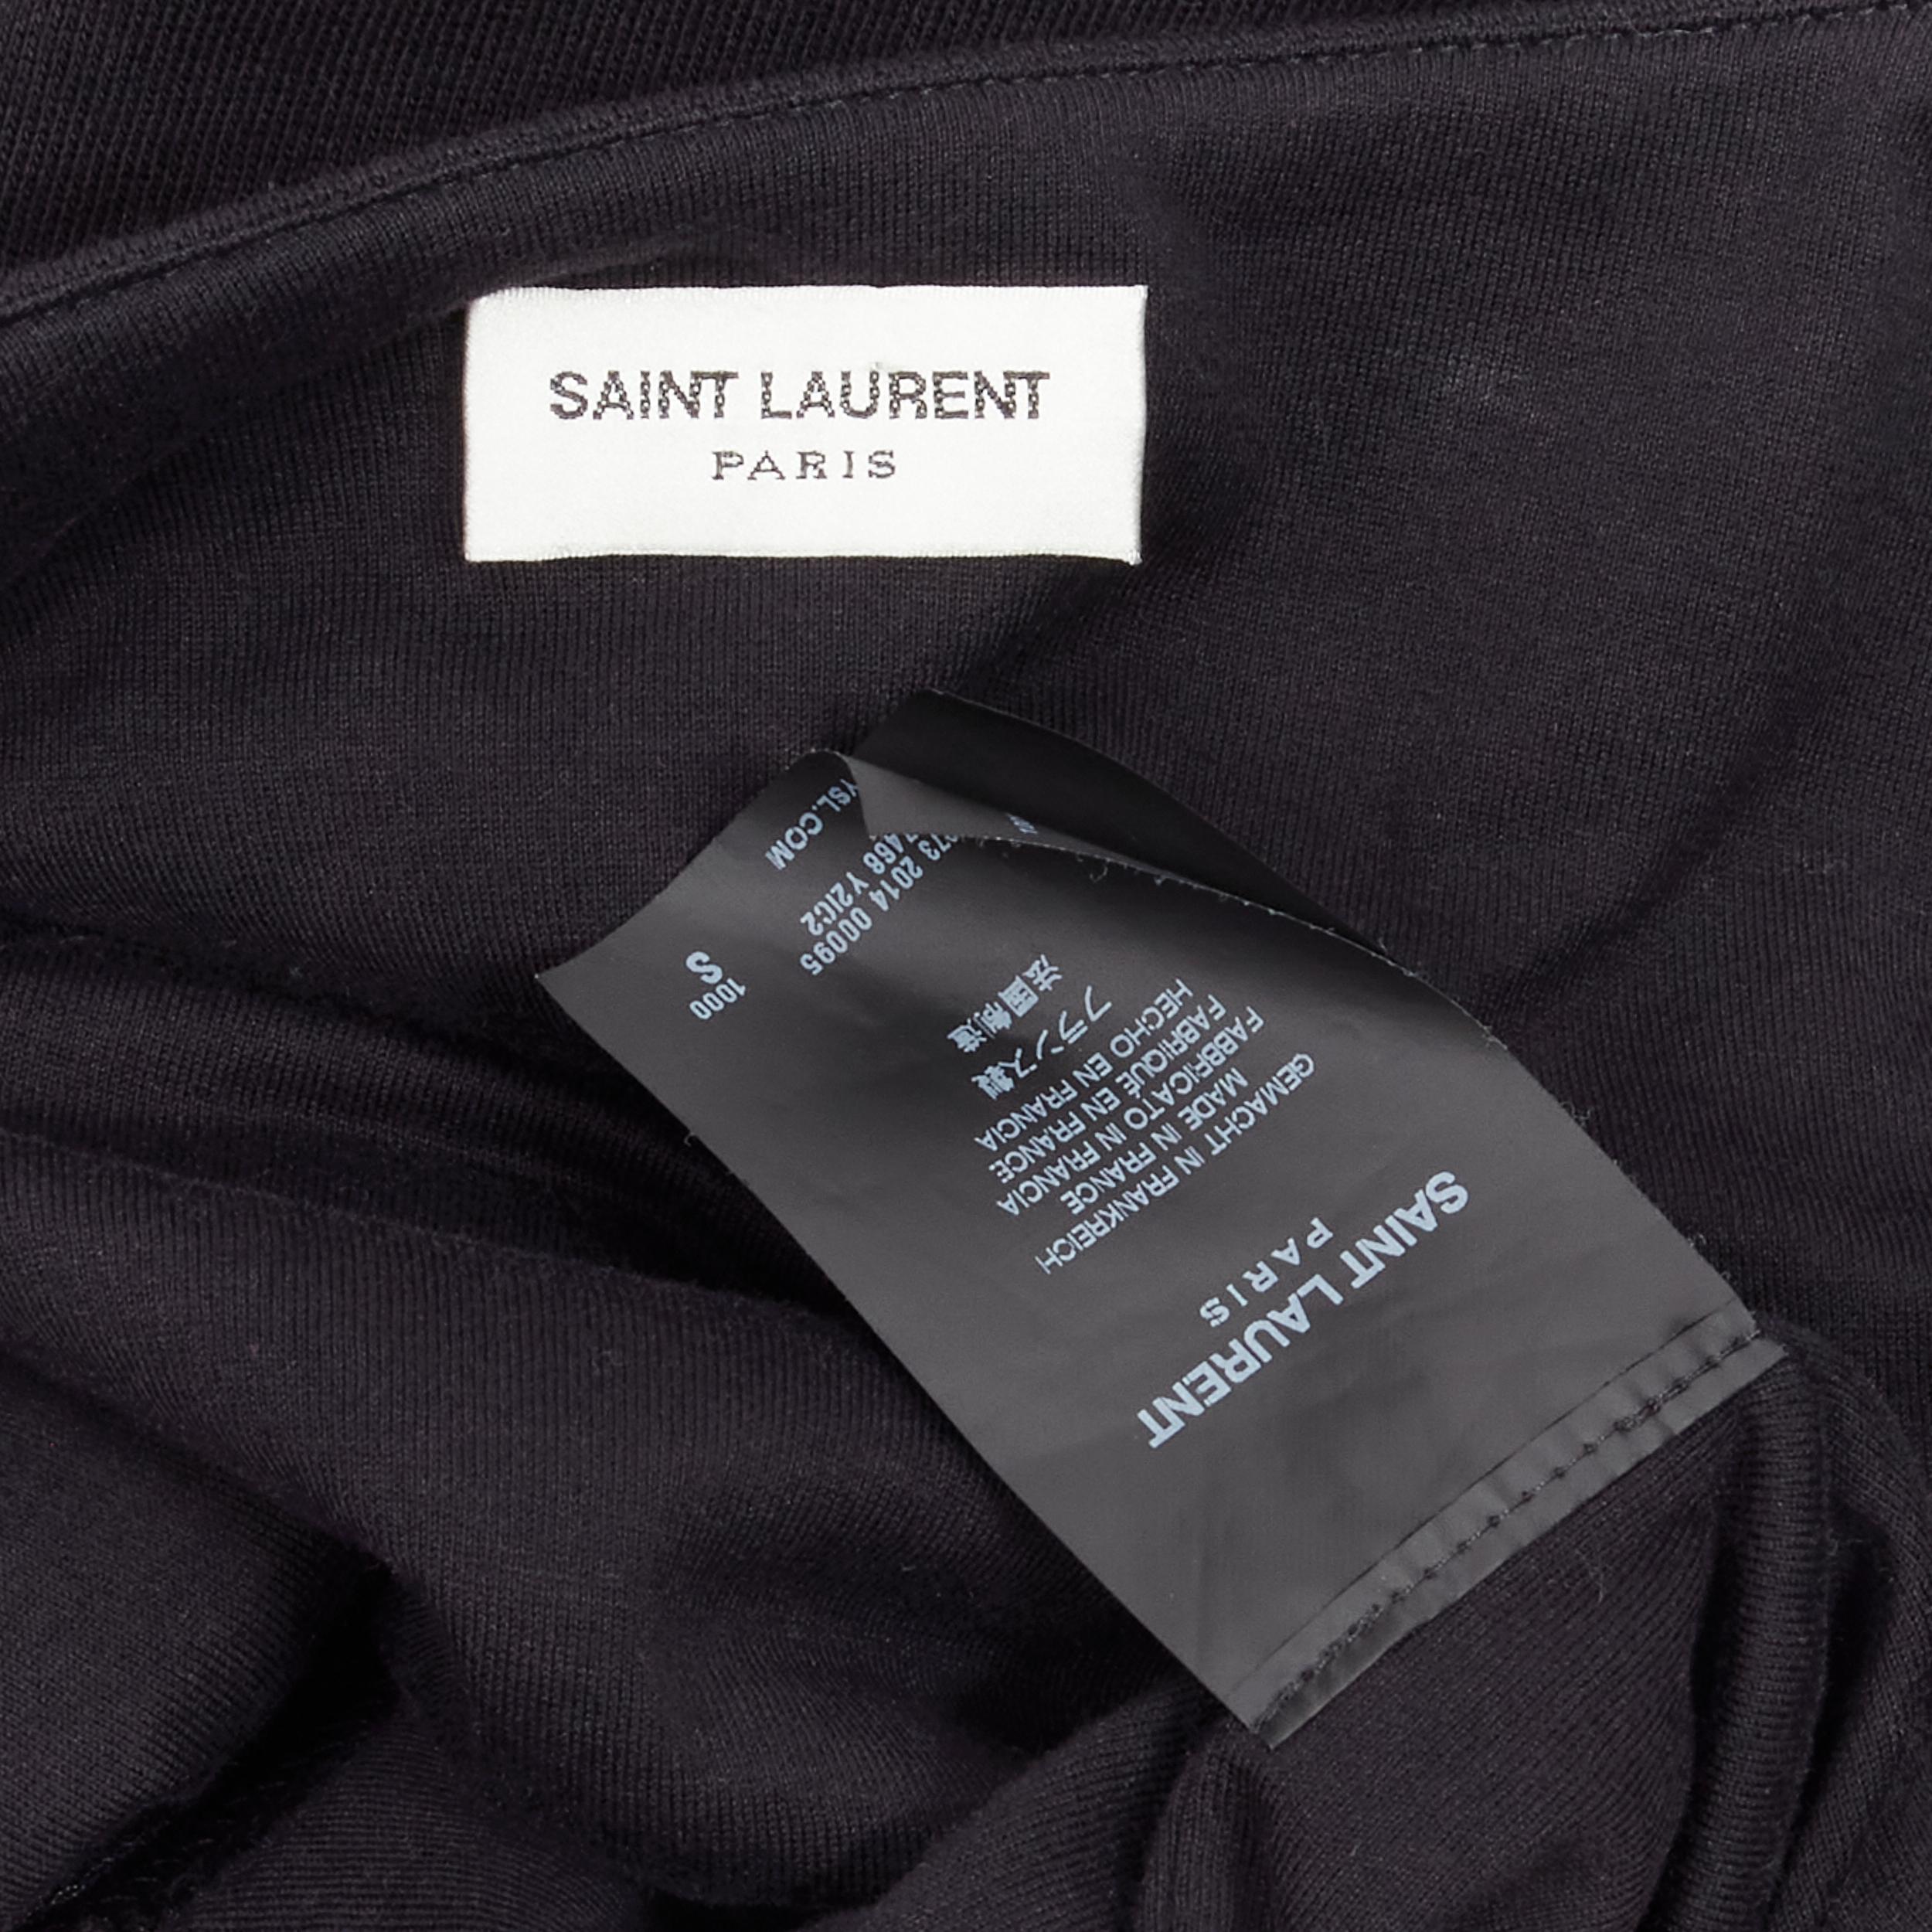 SAINT LAURENT Hedi Slimane 2014 black leather foldover collar pullover sweater S For Sale 4